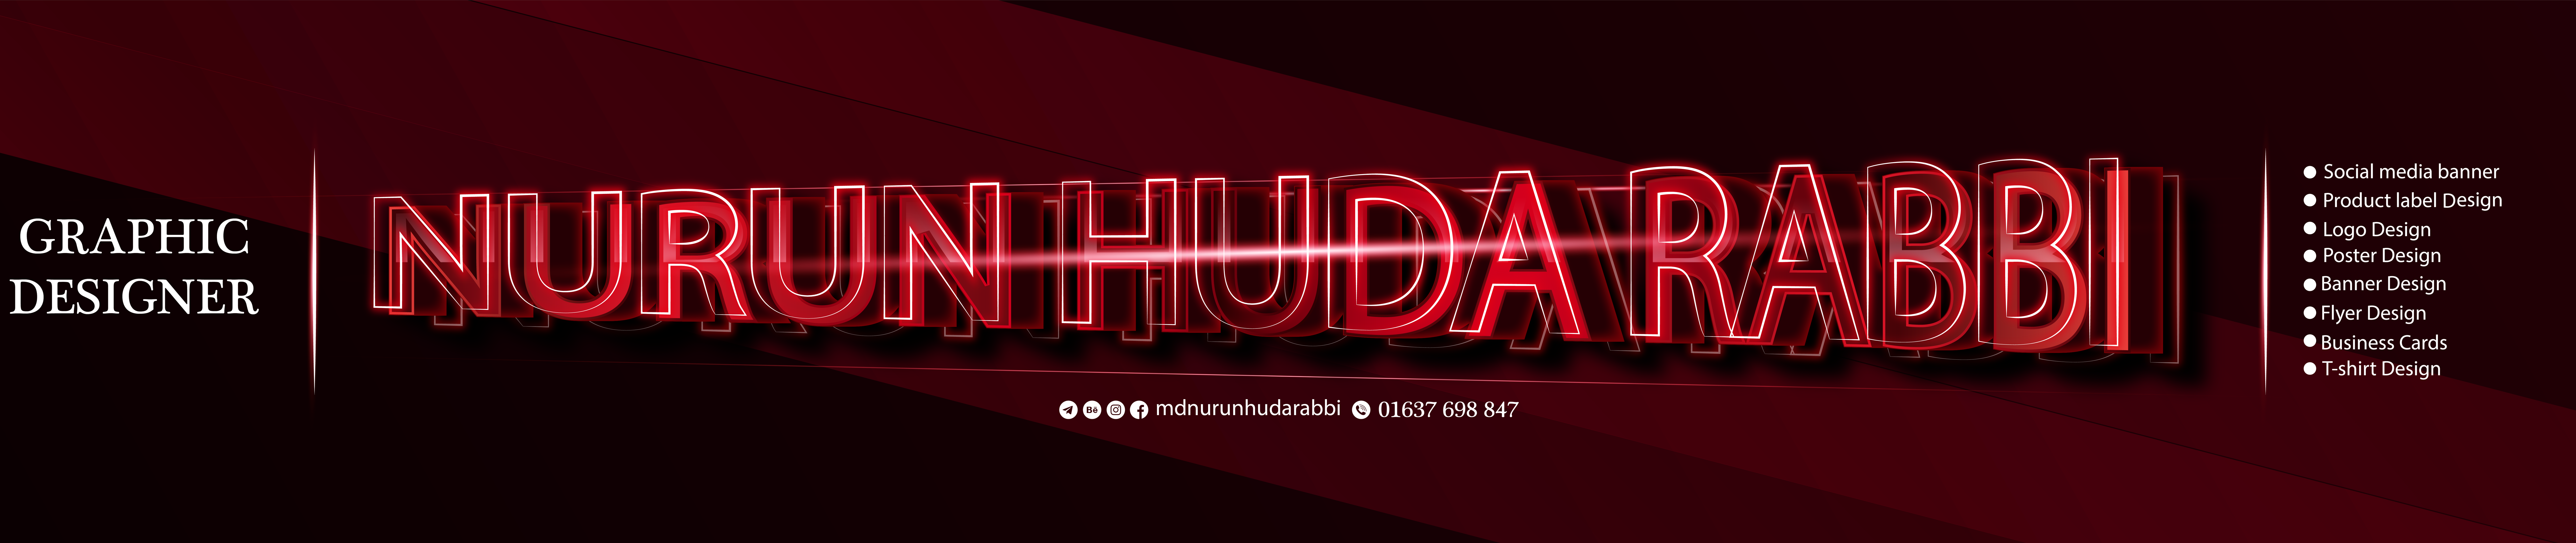 Md Nurun Huda Rabbi's profile banner